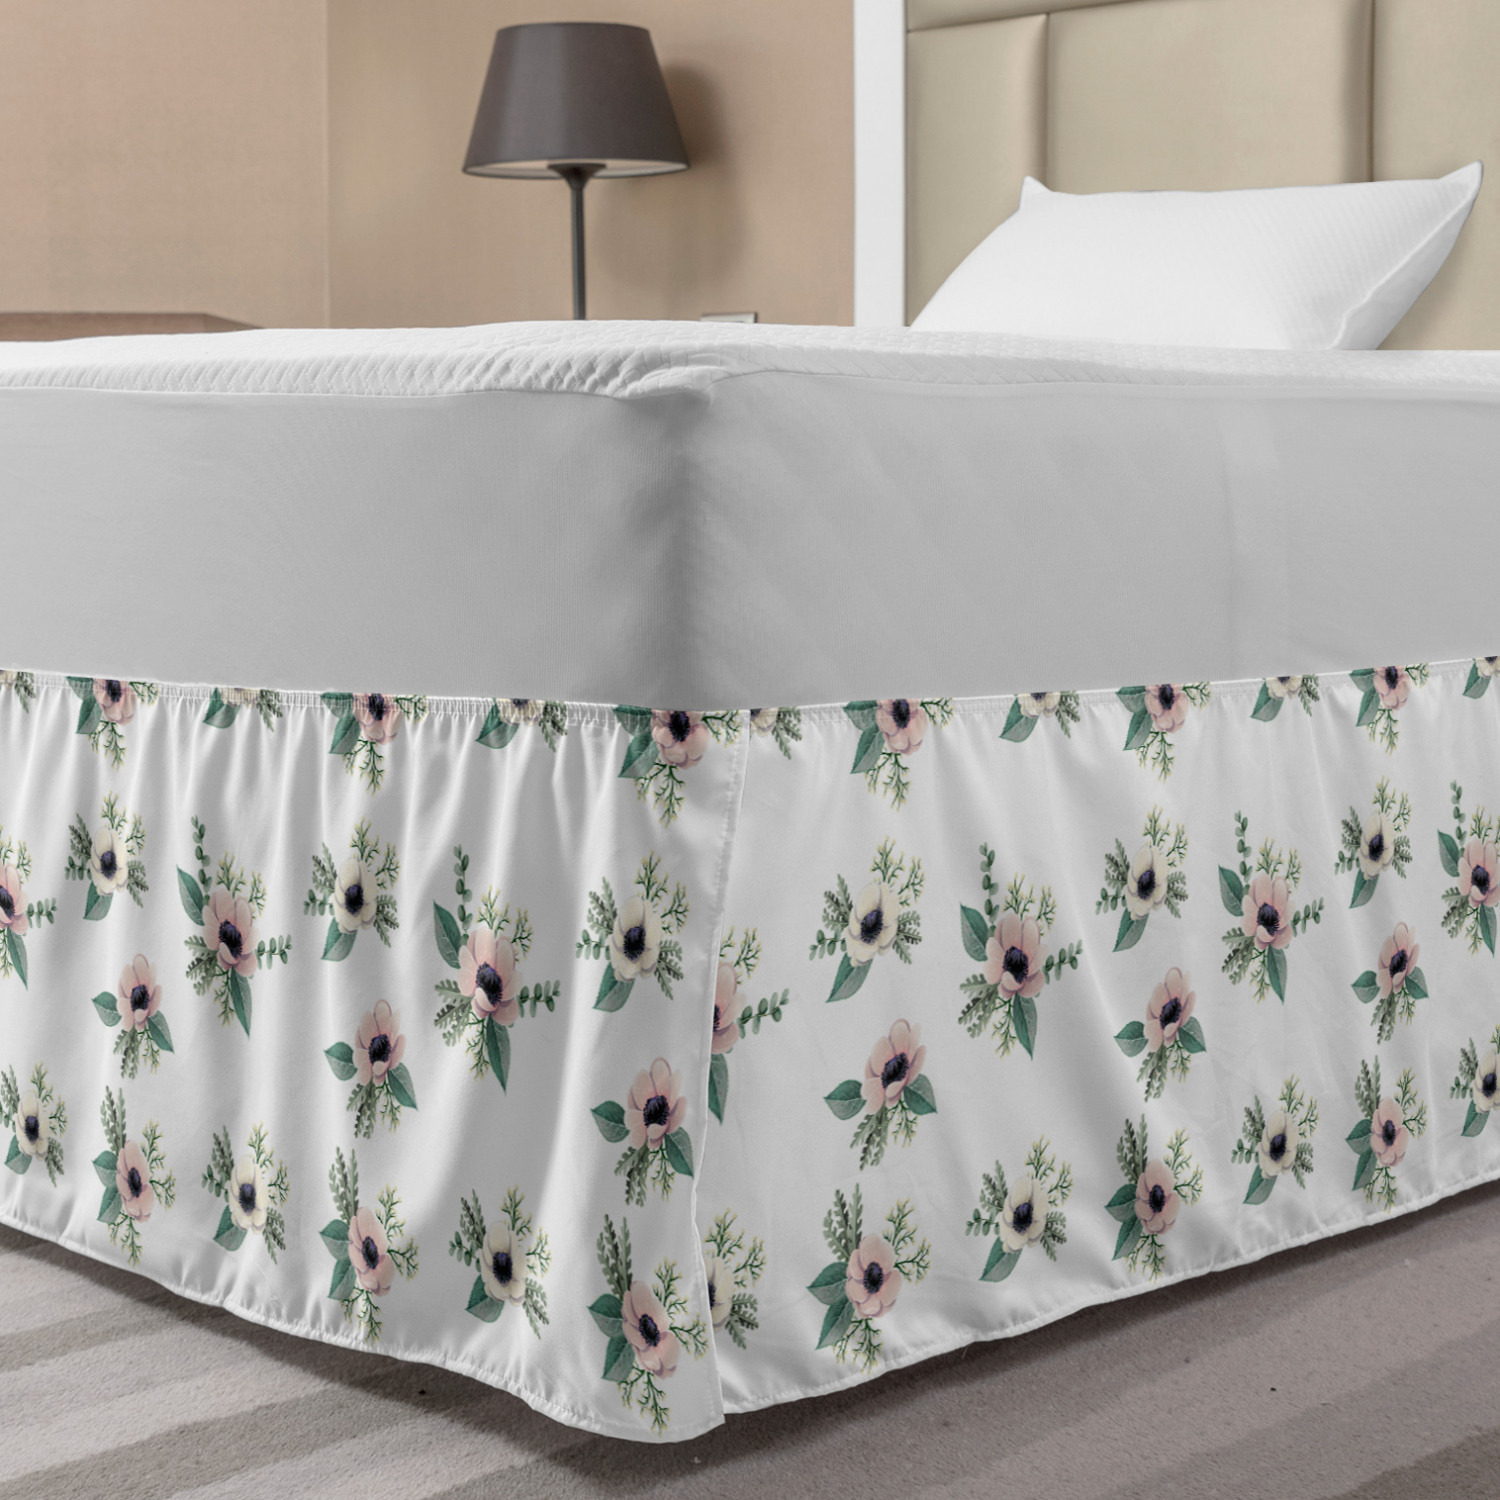 Ambesonne Romance Floral Bedskirt Elastic Wrap Around Skirt Gathered Design 